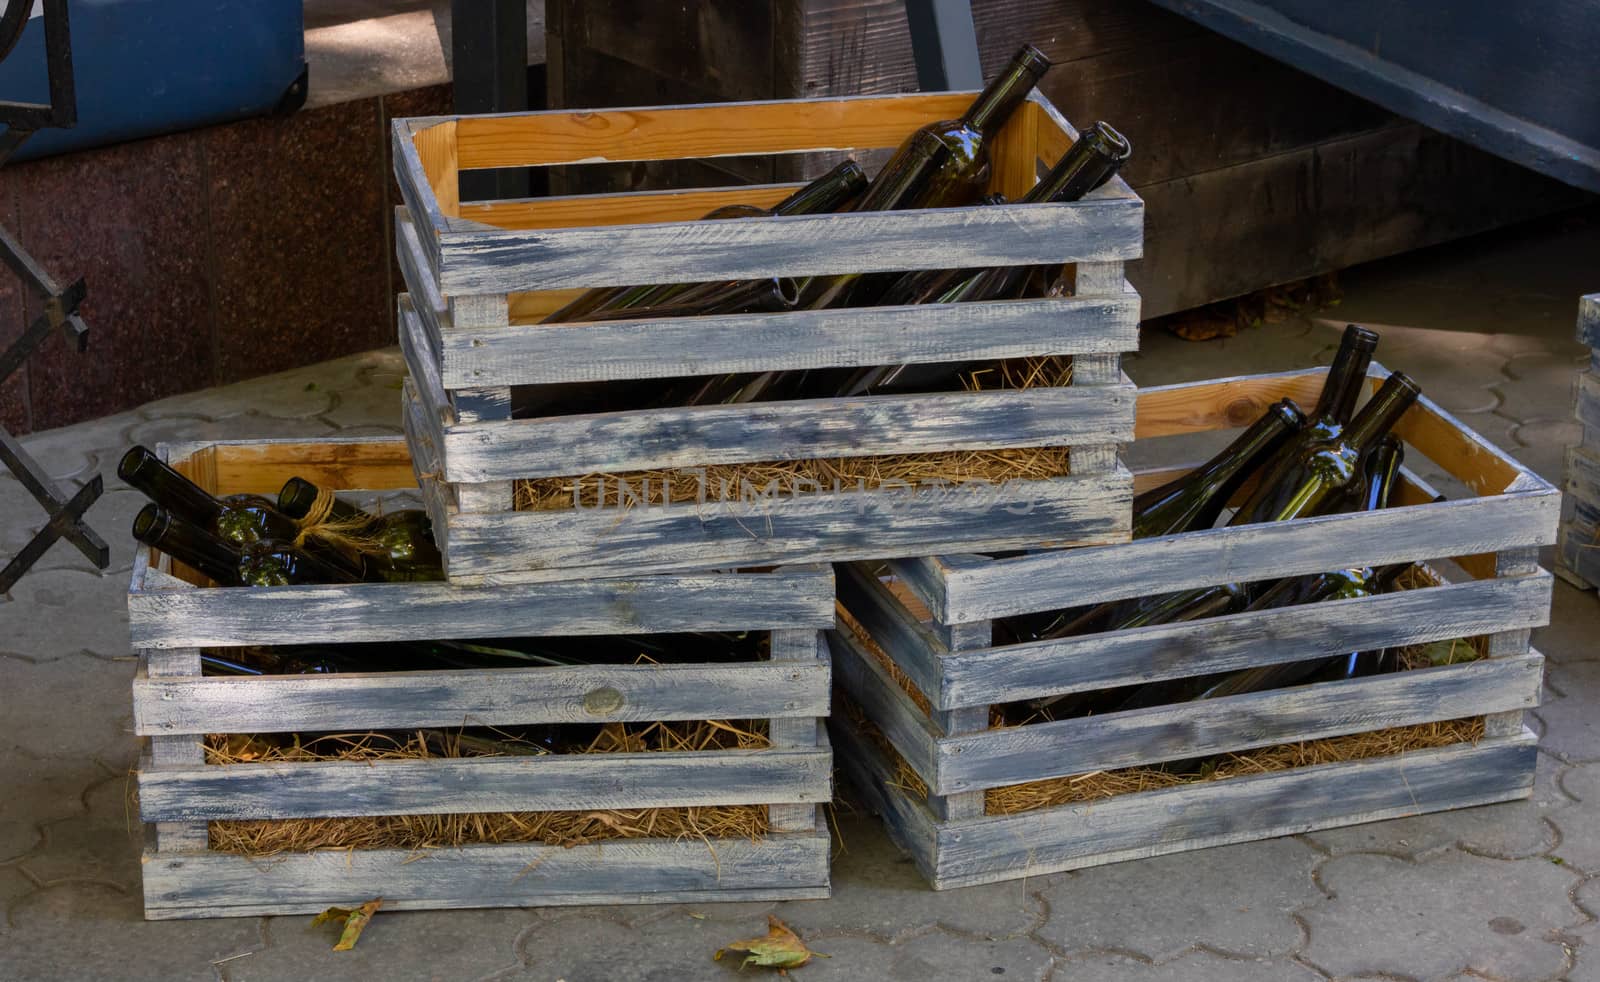 Empty wine bottles in gray wooden crates. by lapushka62